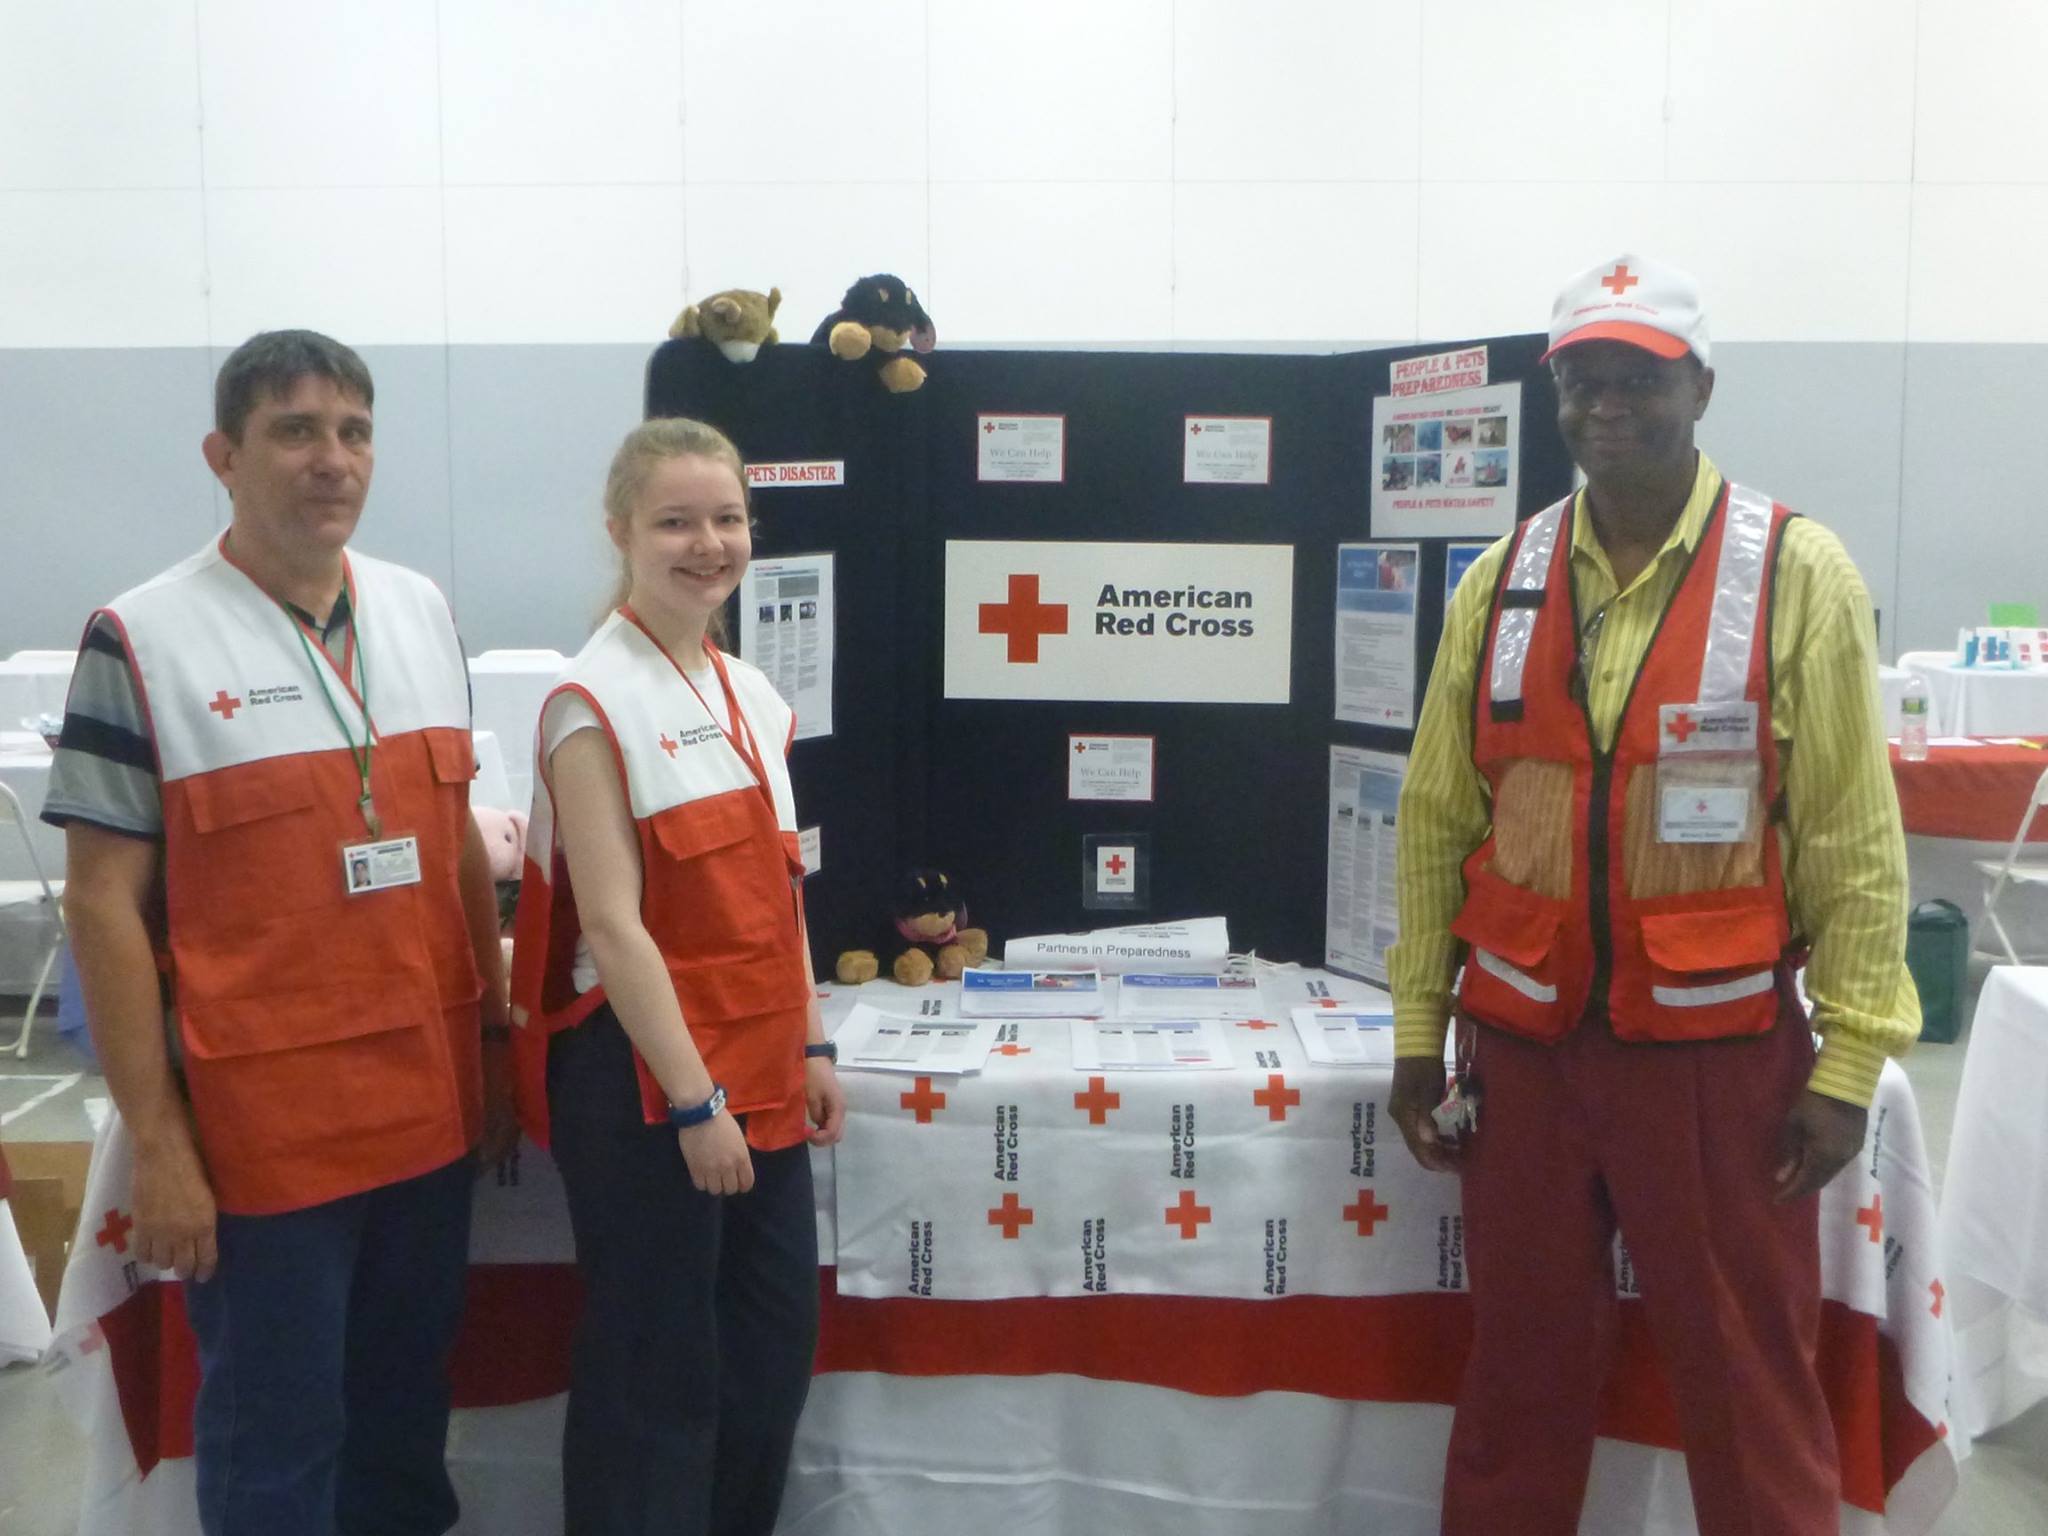 American Red Cross display